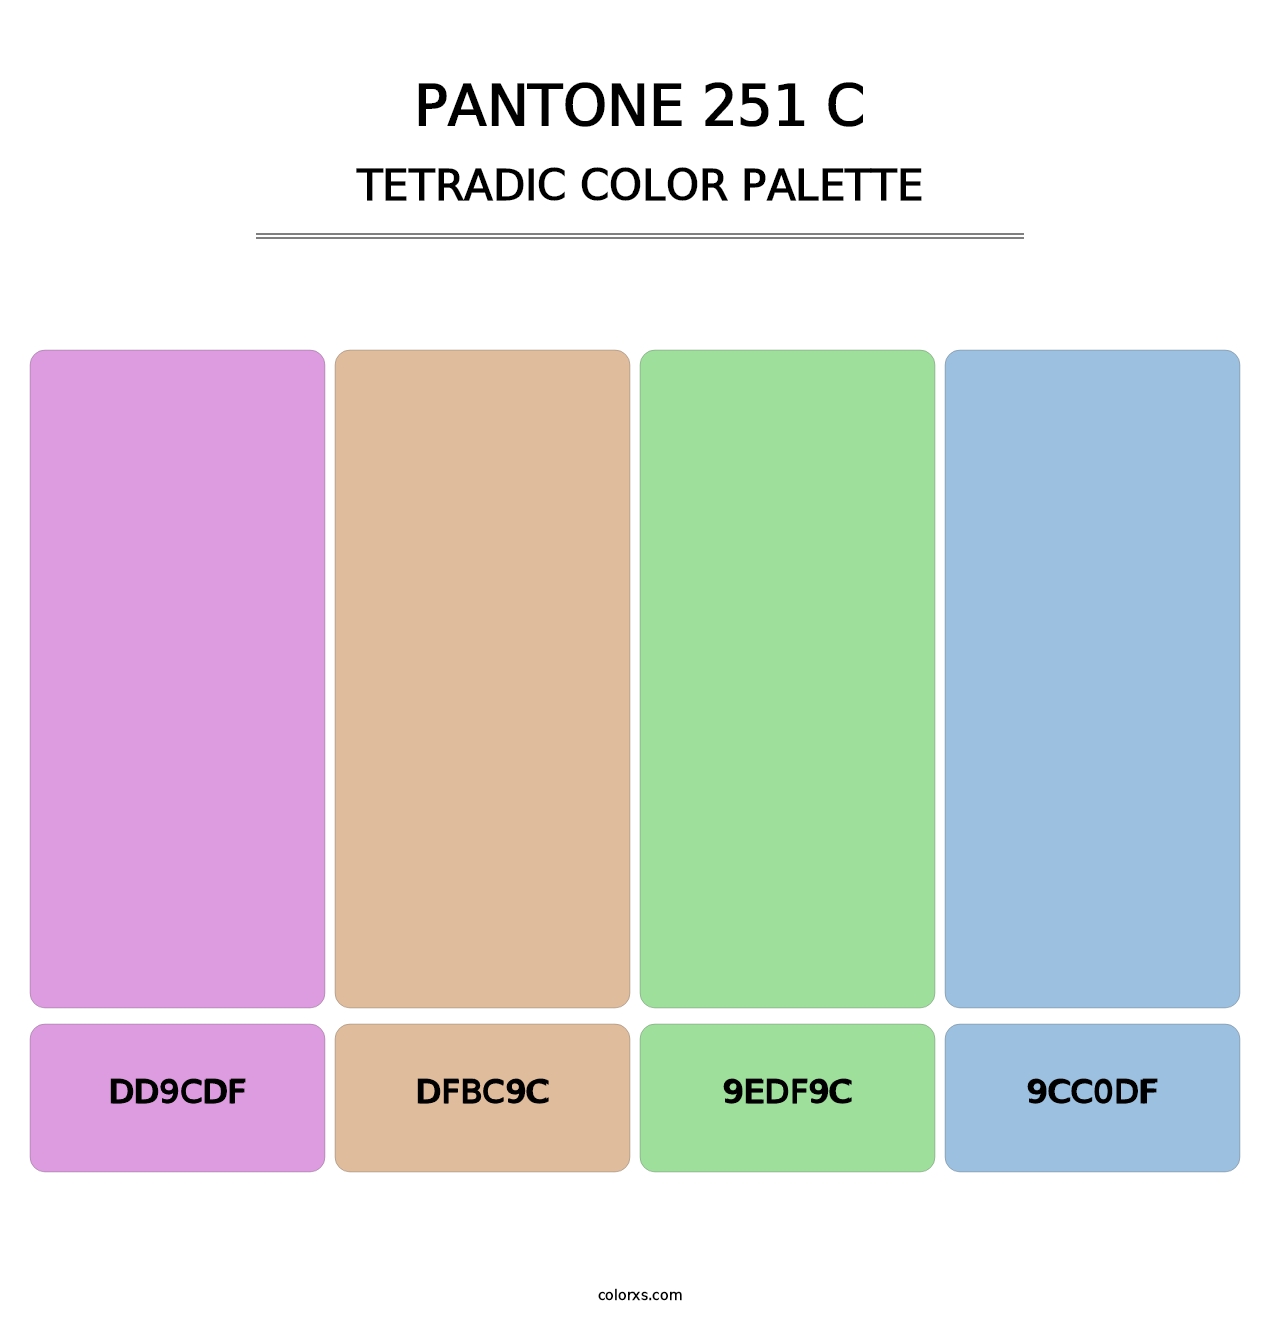 PANTONE 251 C - Tetradic Color Palette